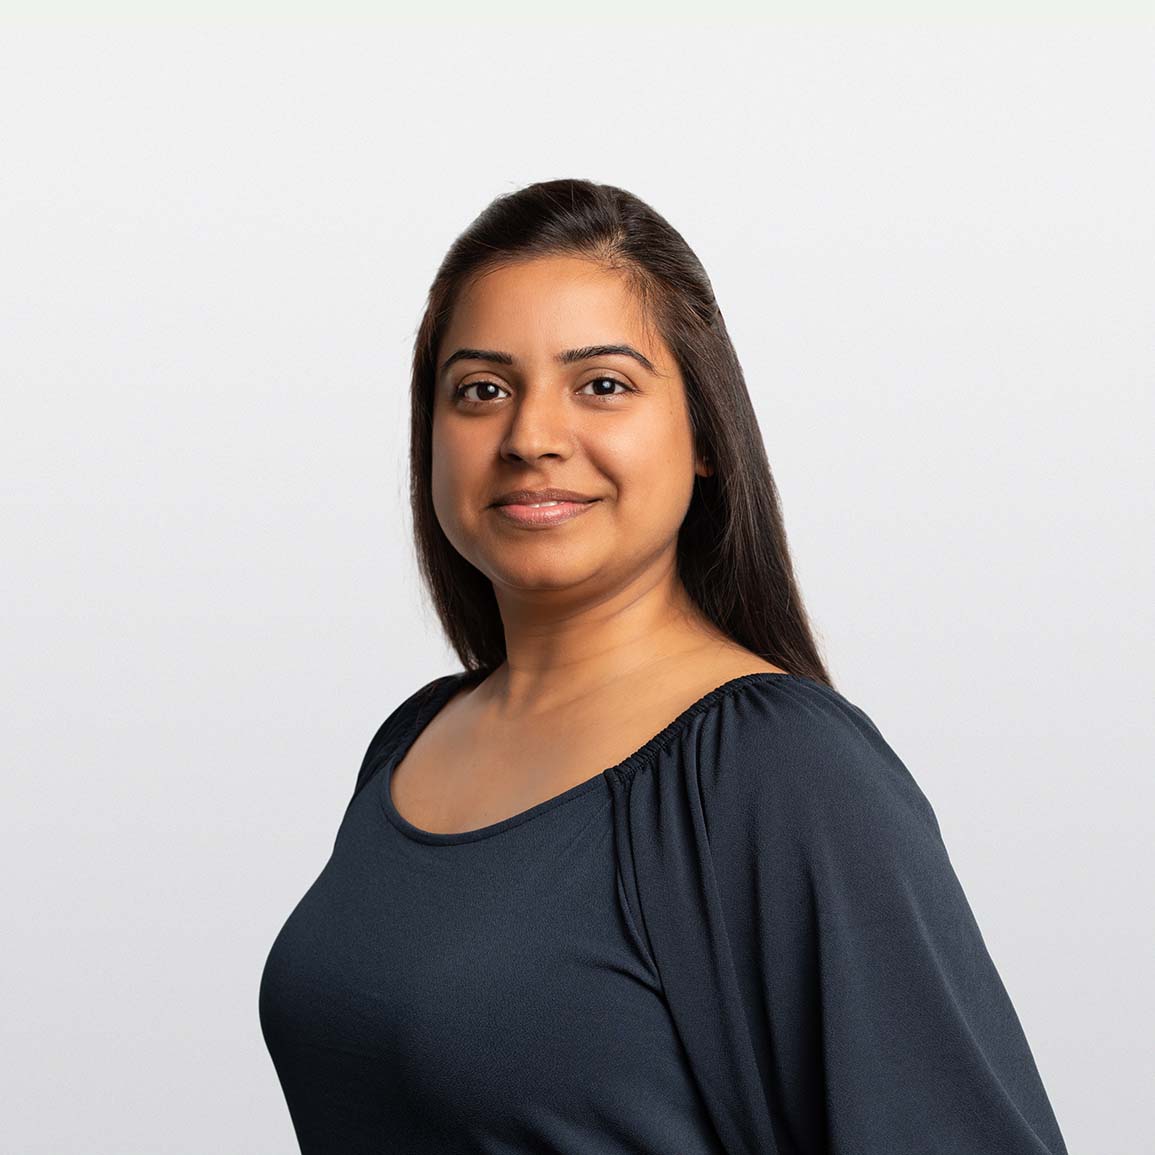 Image of Aparna Gill, ATB Financial Advisor, on white background.